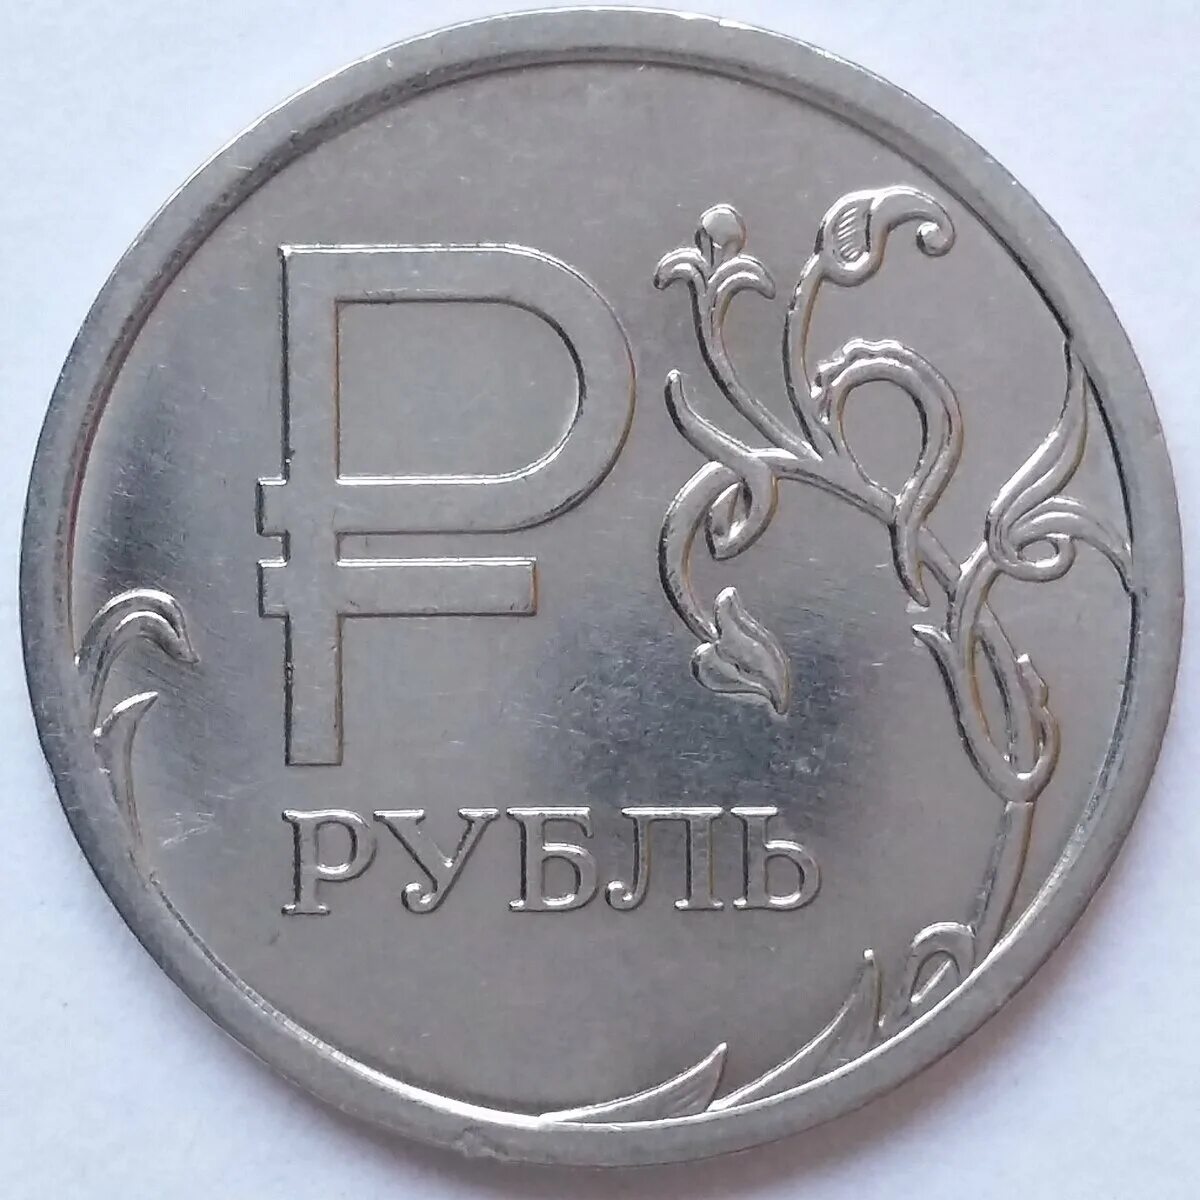 7 п 2014. Рубль. Монеты рубли. Монета 1 рубль. Монета знак рубля.